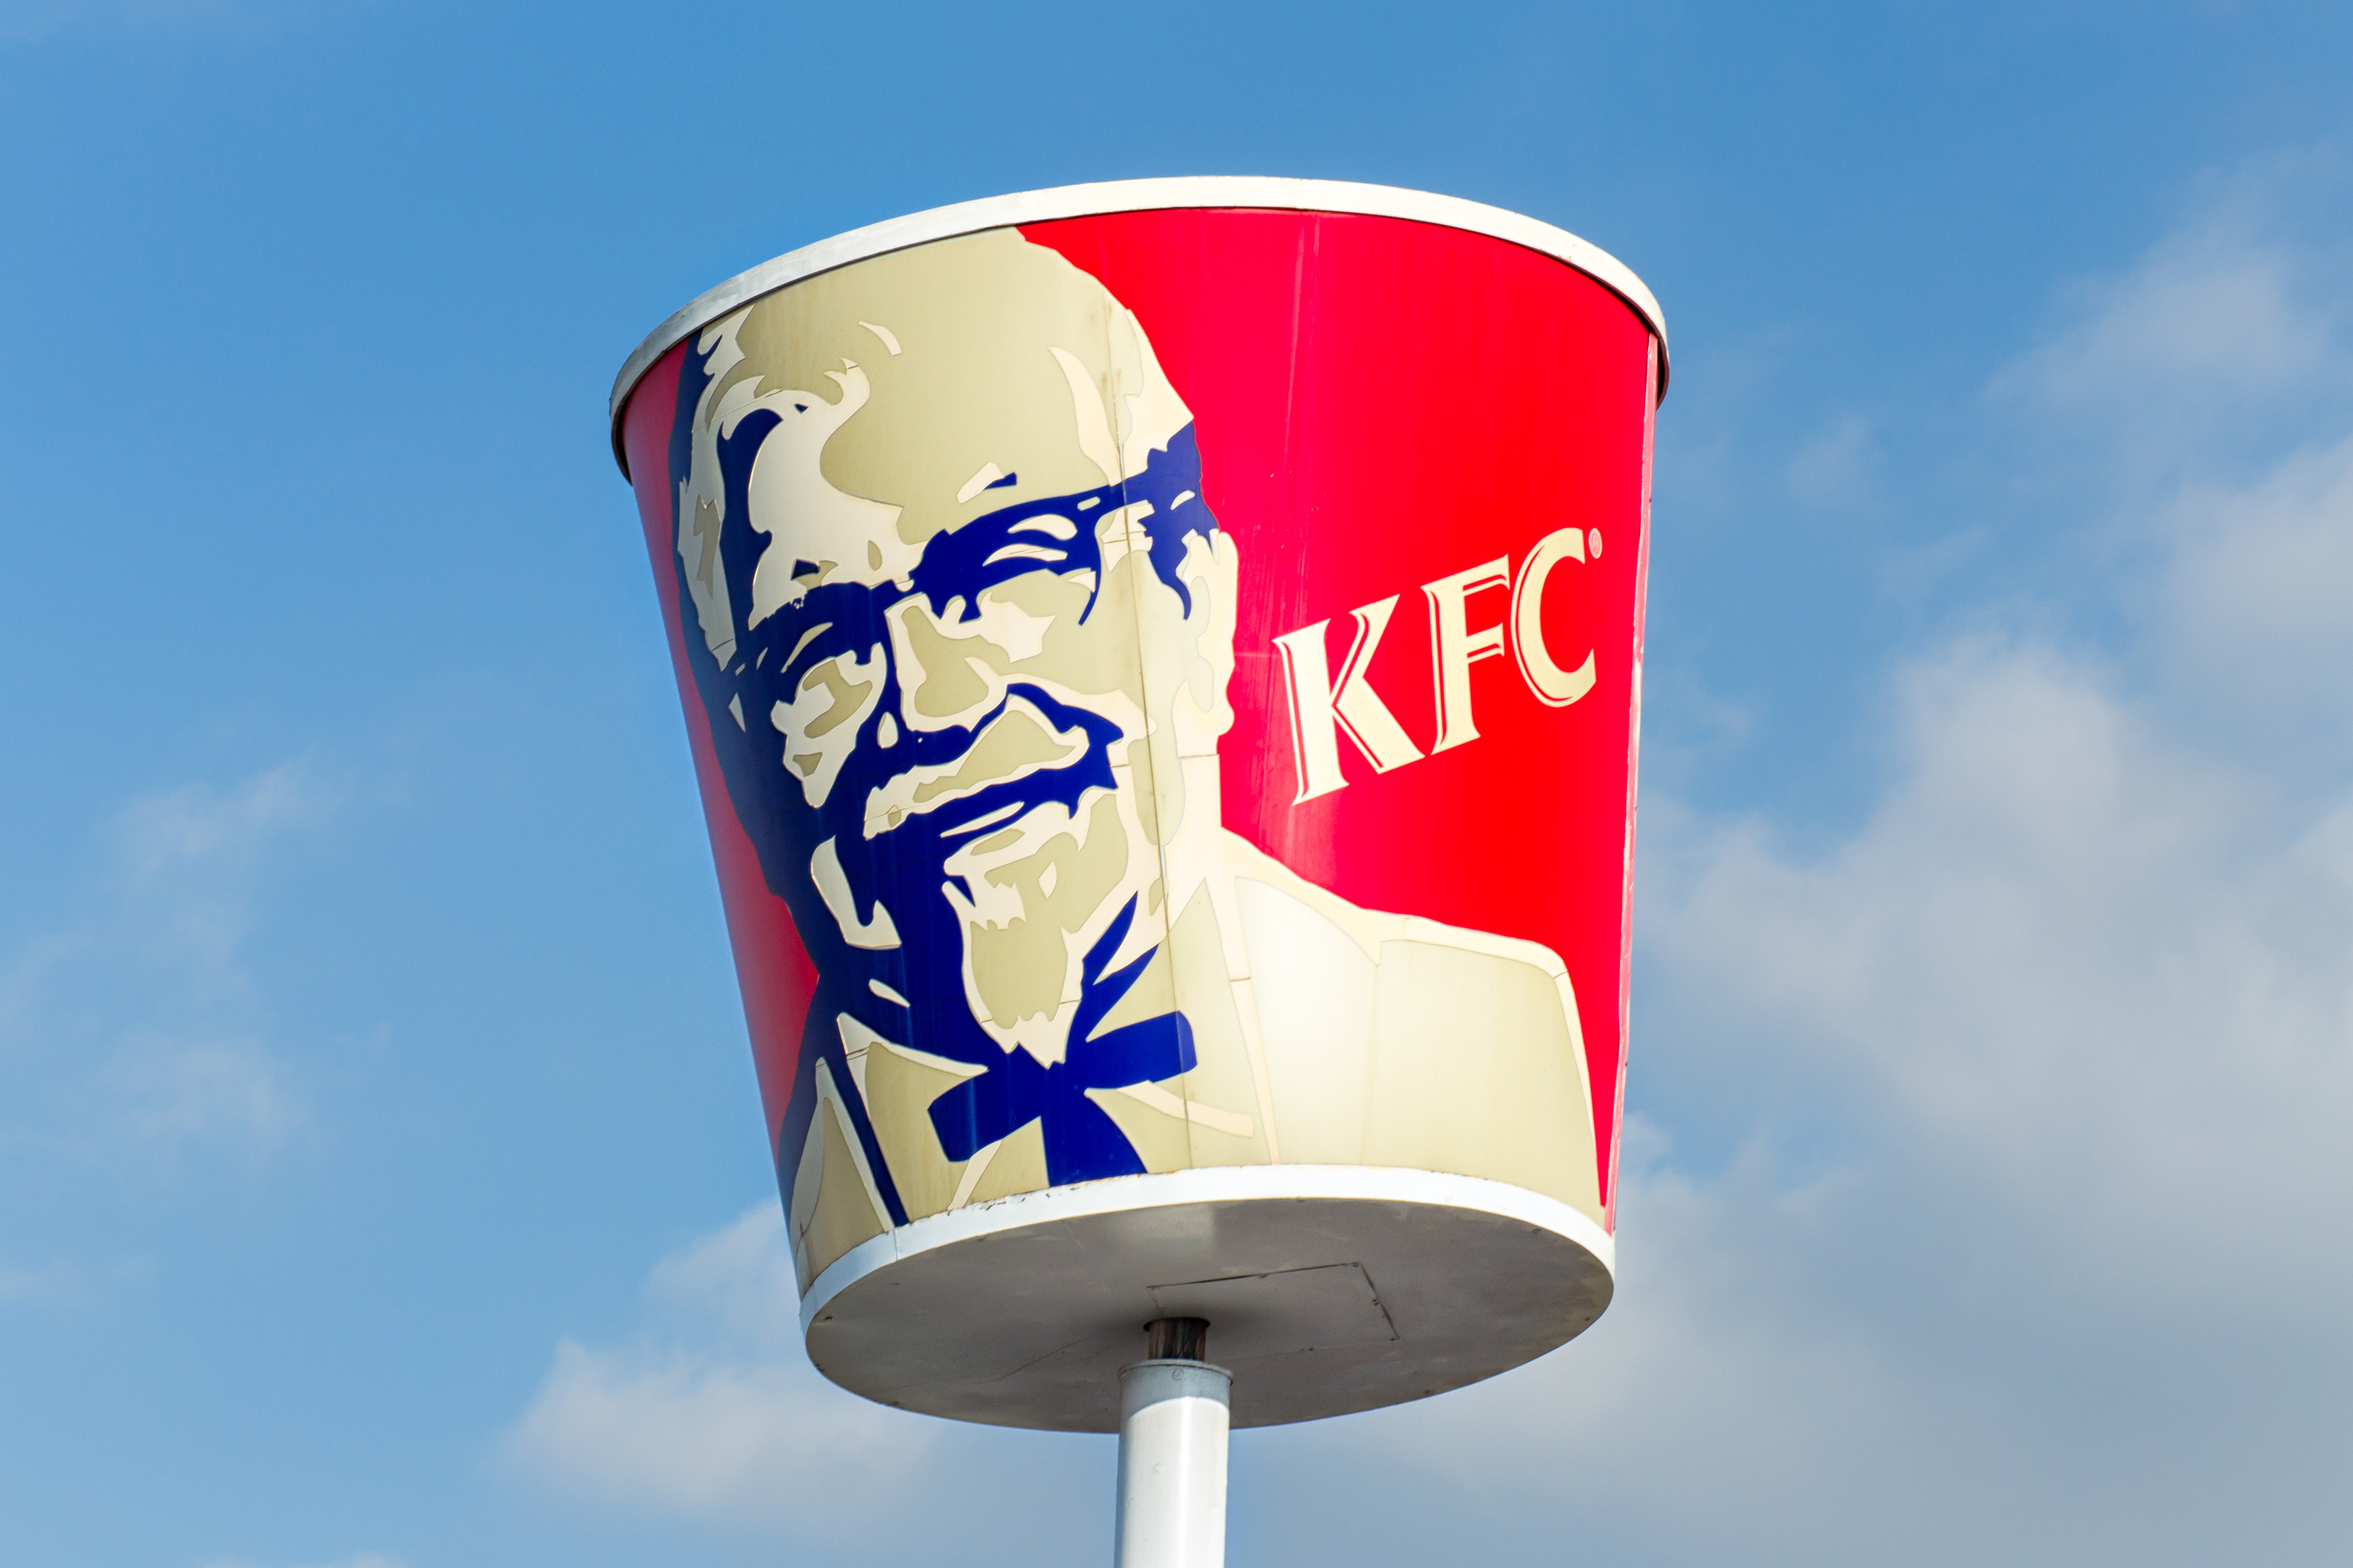 HD wallpaper KFC Fast Food Design Food and Drink Creative Golden  Advertising  Wallpaper Flare